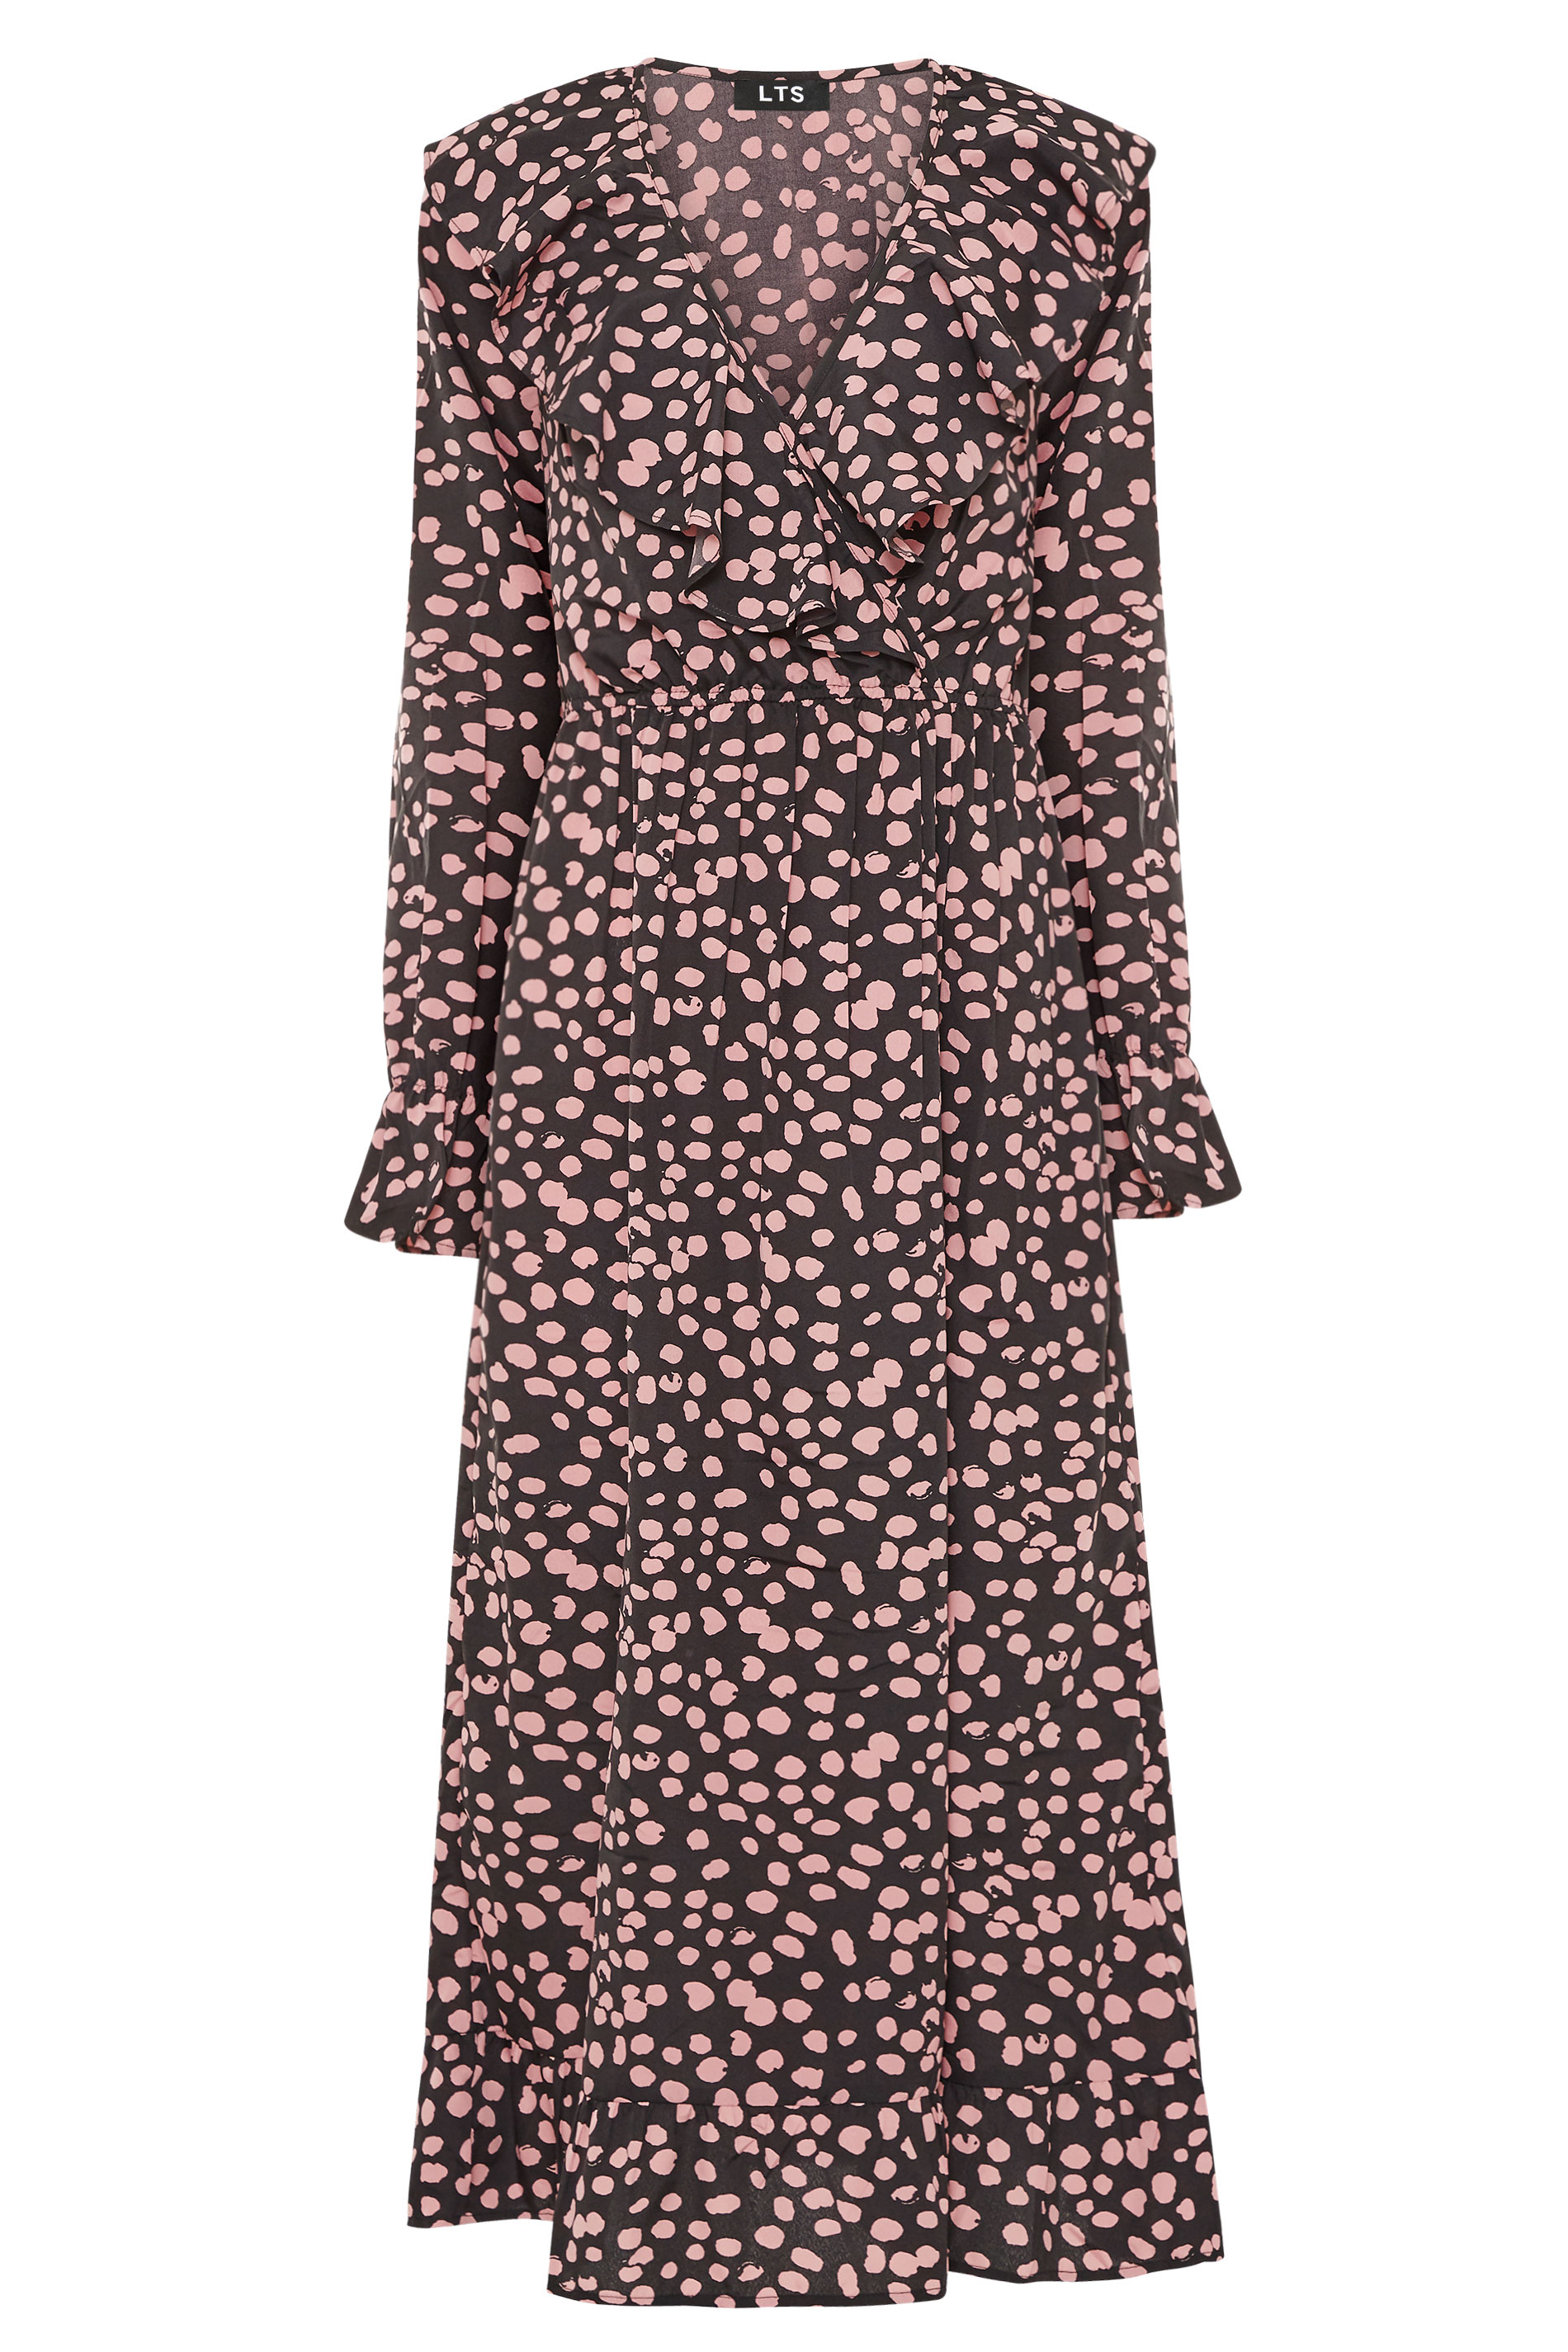 LTS Black & Pink Dalmatian Print Ruffle Midi Wrap Dress | Long Tall Sally